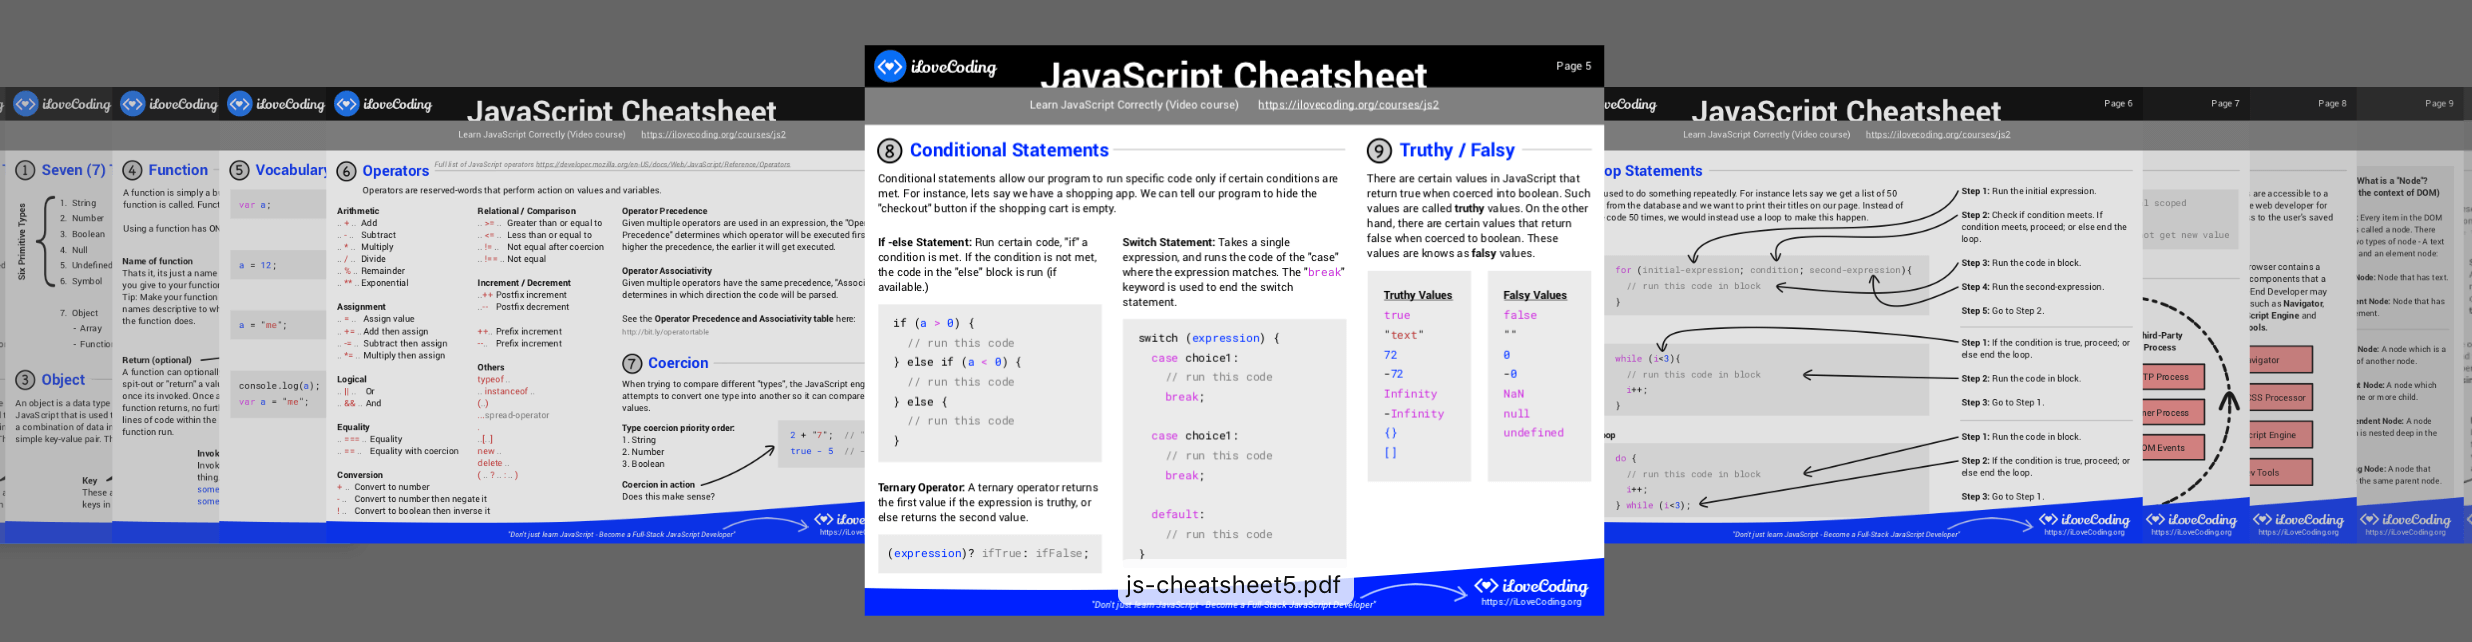 JavaScript Cheatsheet   Comprehensive PDF included   iLoveCoding